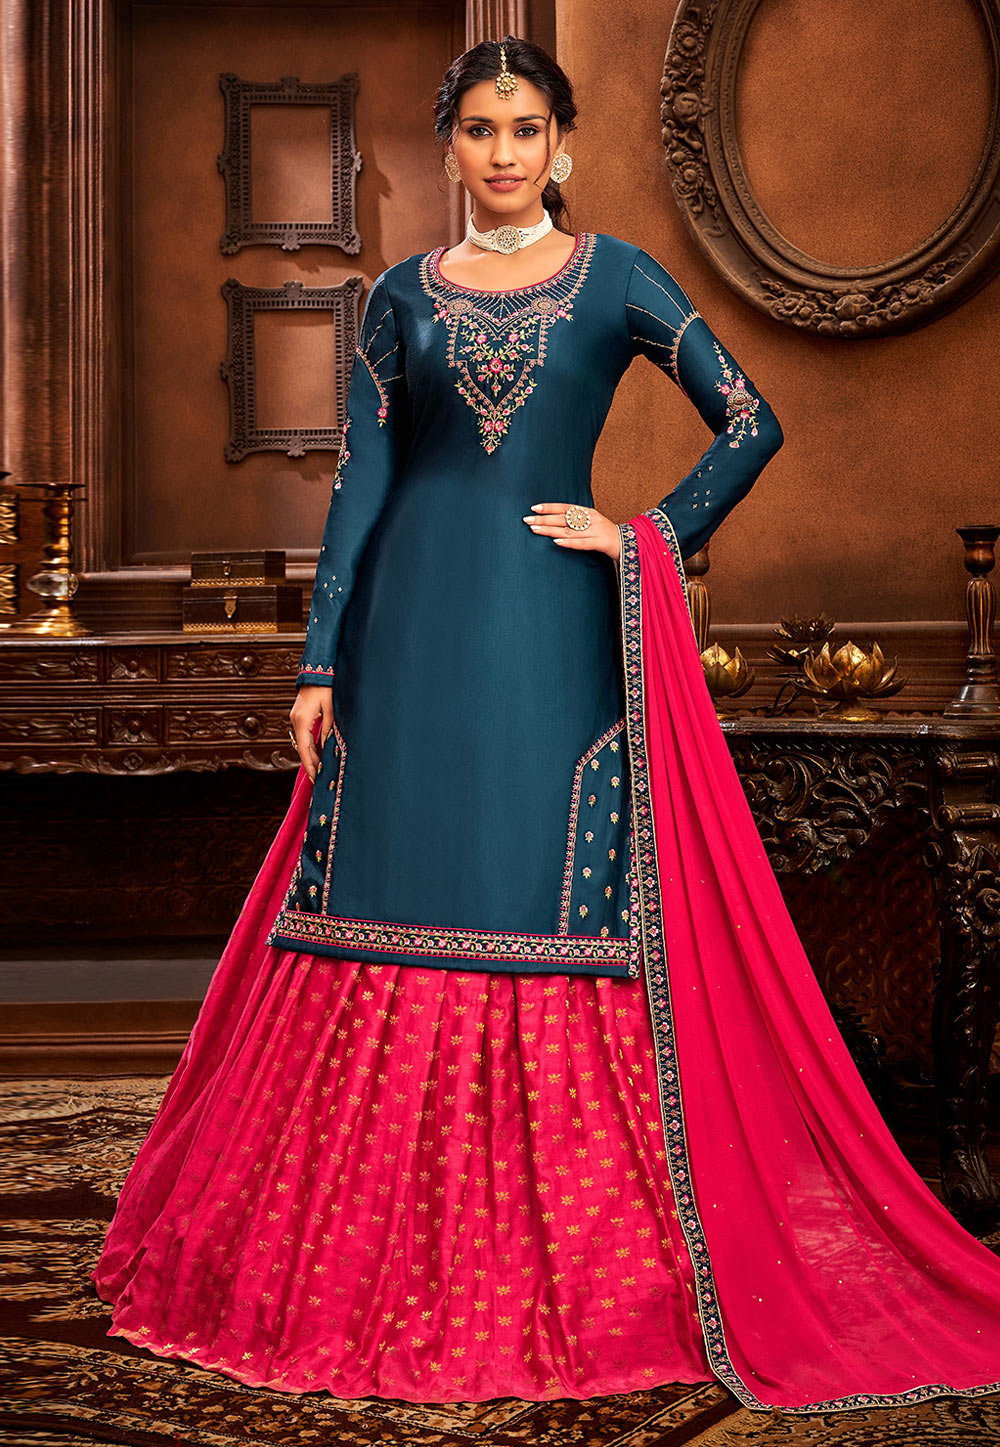 Amazing Indo Western Outfits to try this wedding season | by riya roy |  Medium